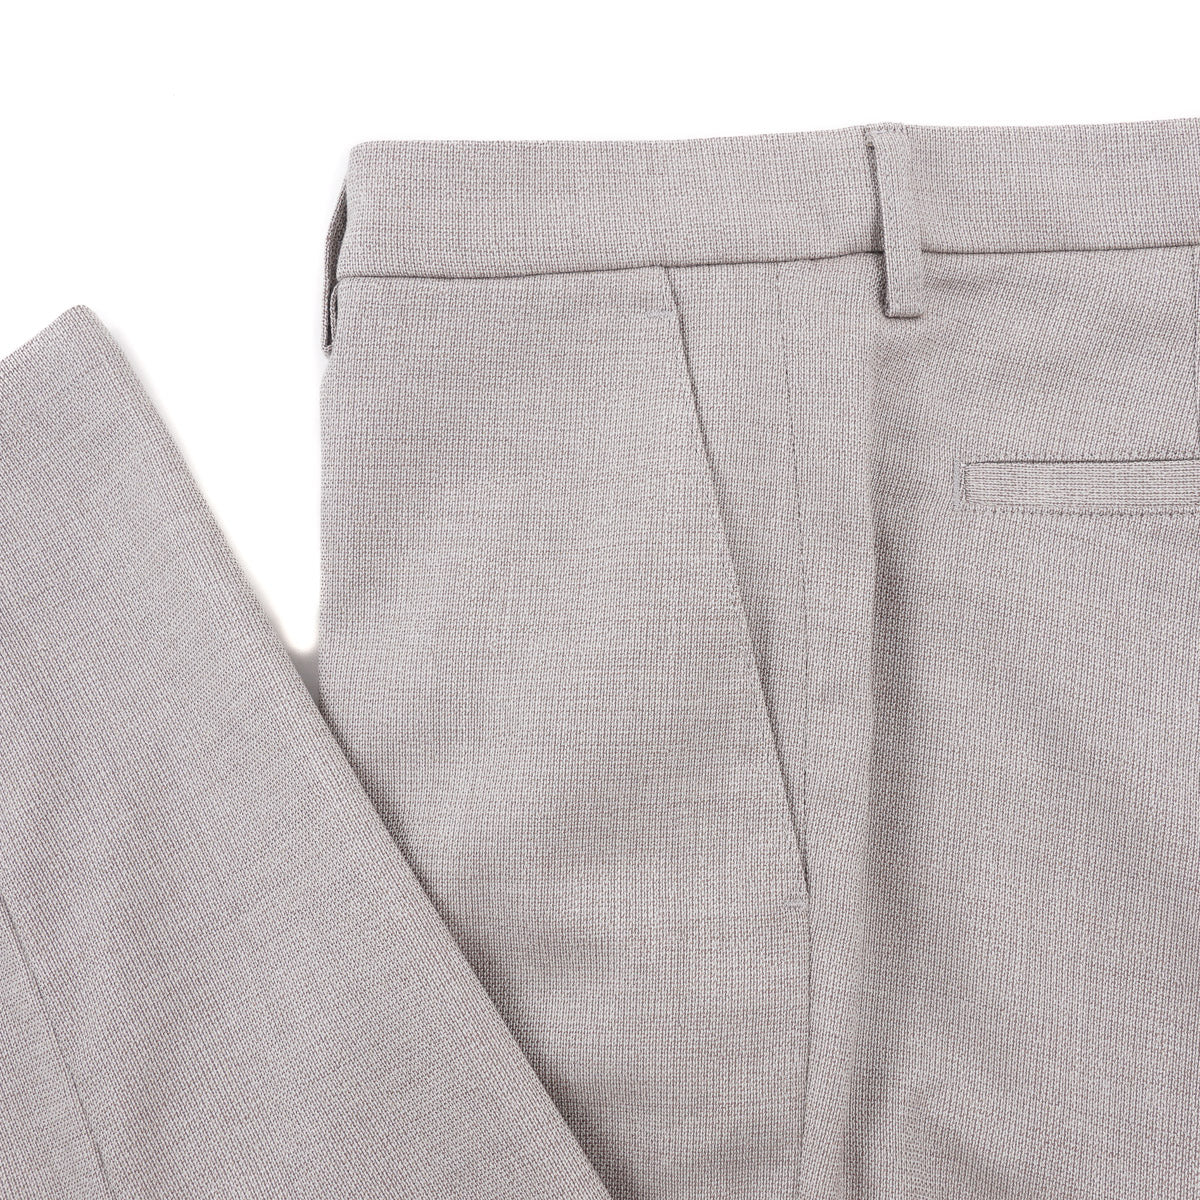 Marco Pescarolo Cashmere and Wool Pants - Top Shelf Apparel